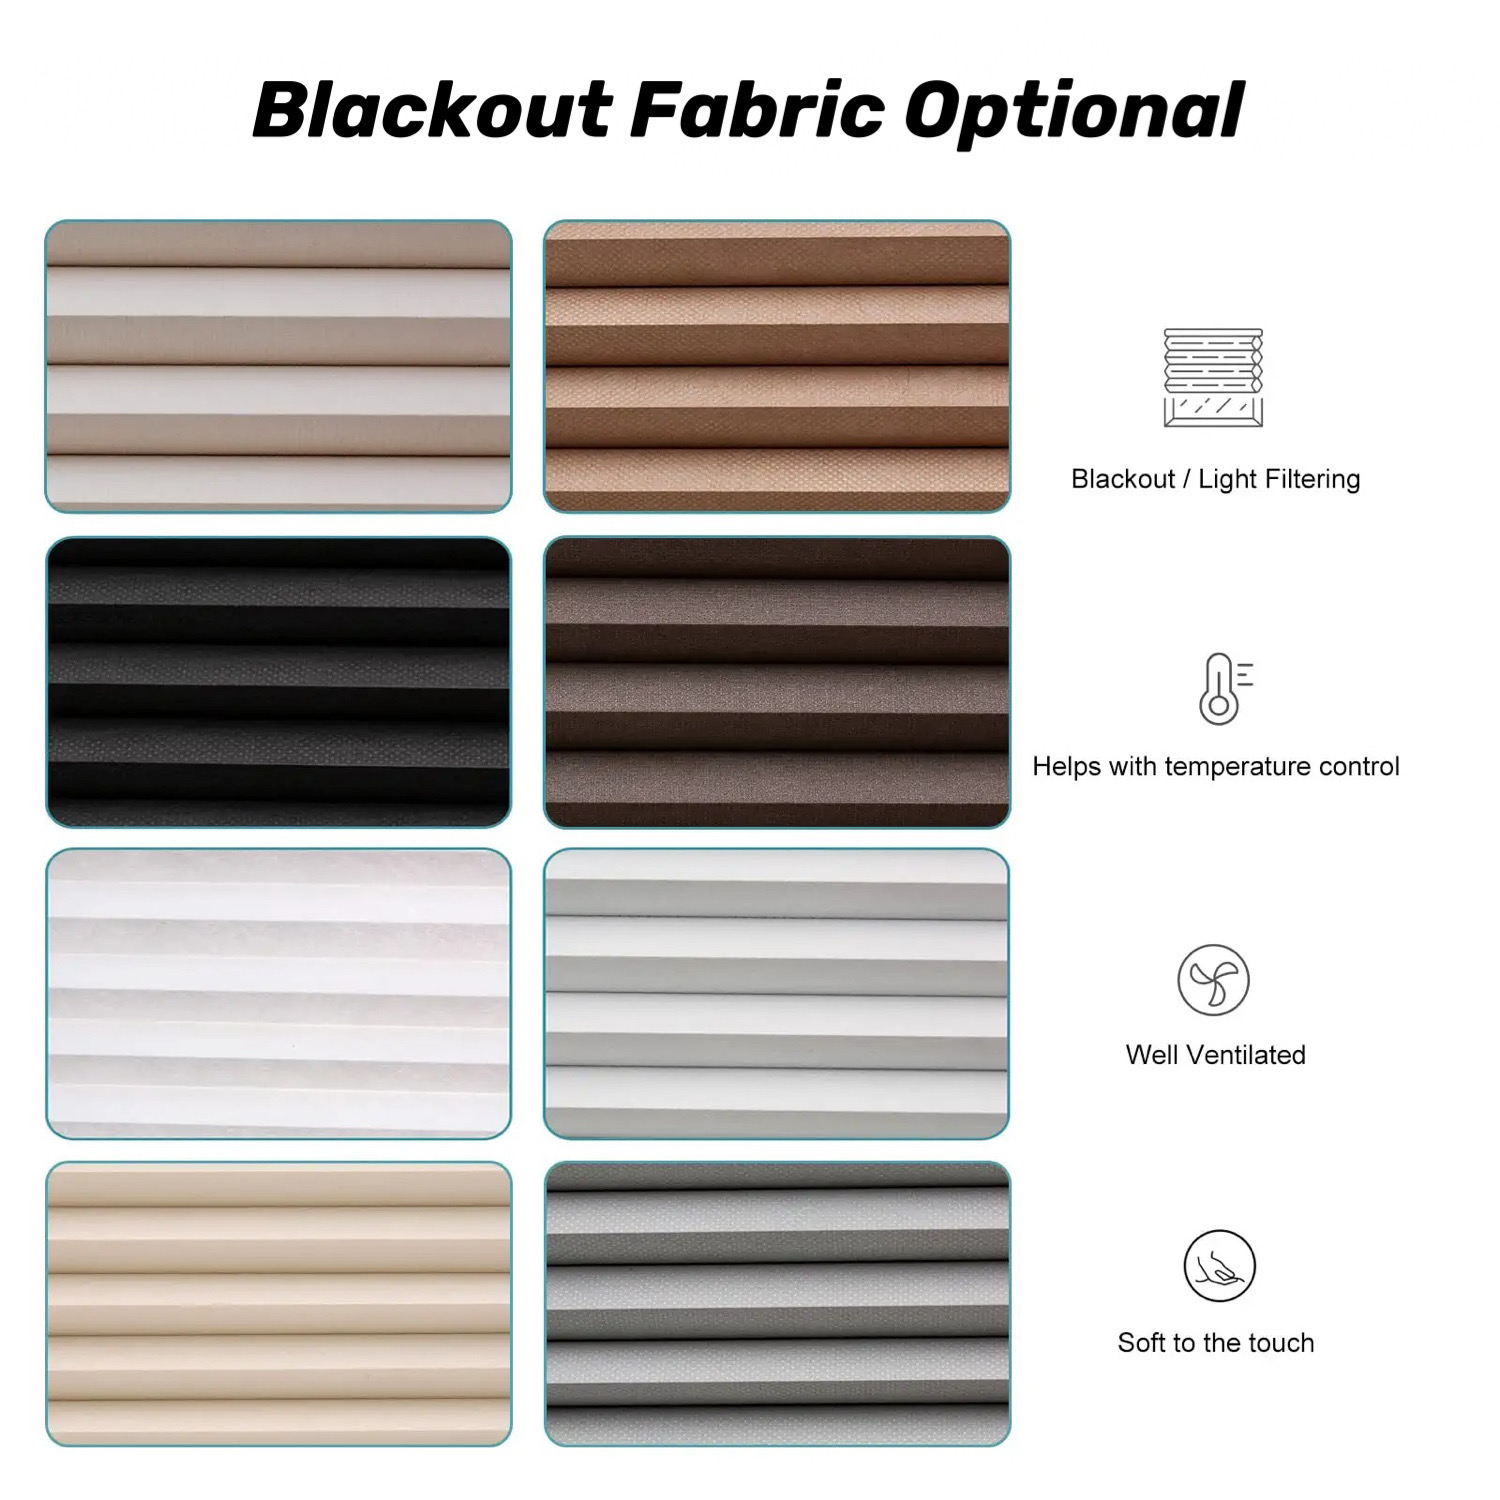 Blackout cellular shades fabric optional